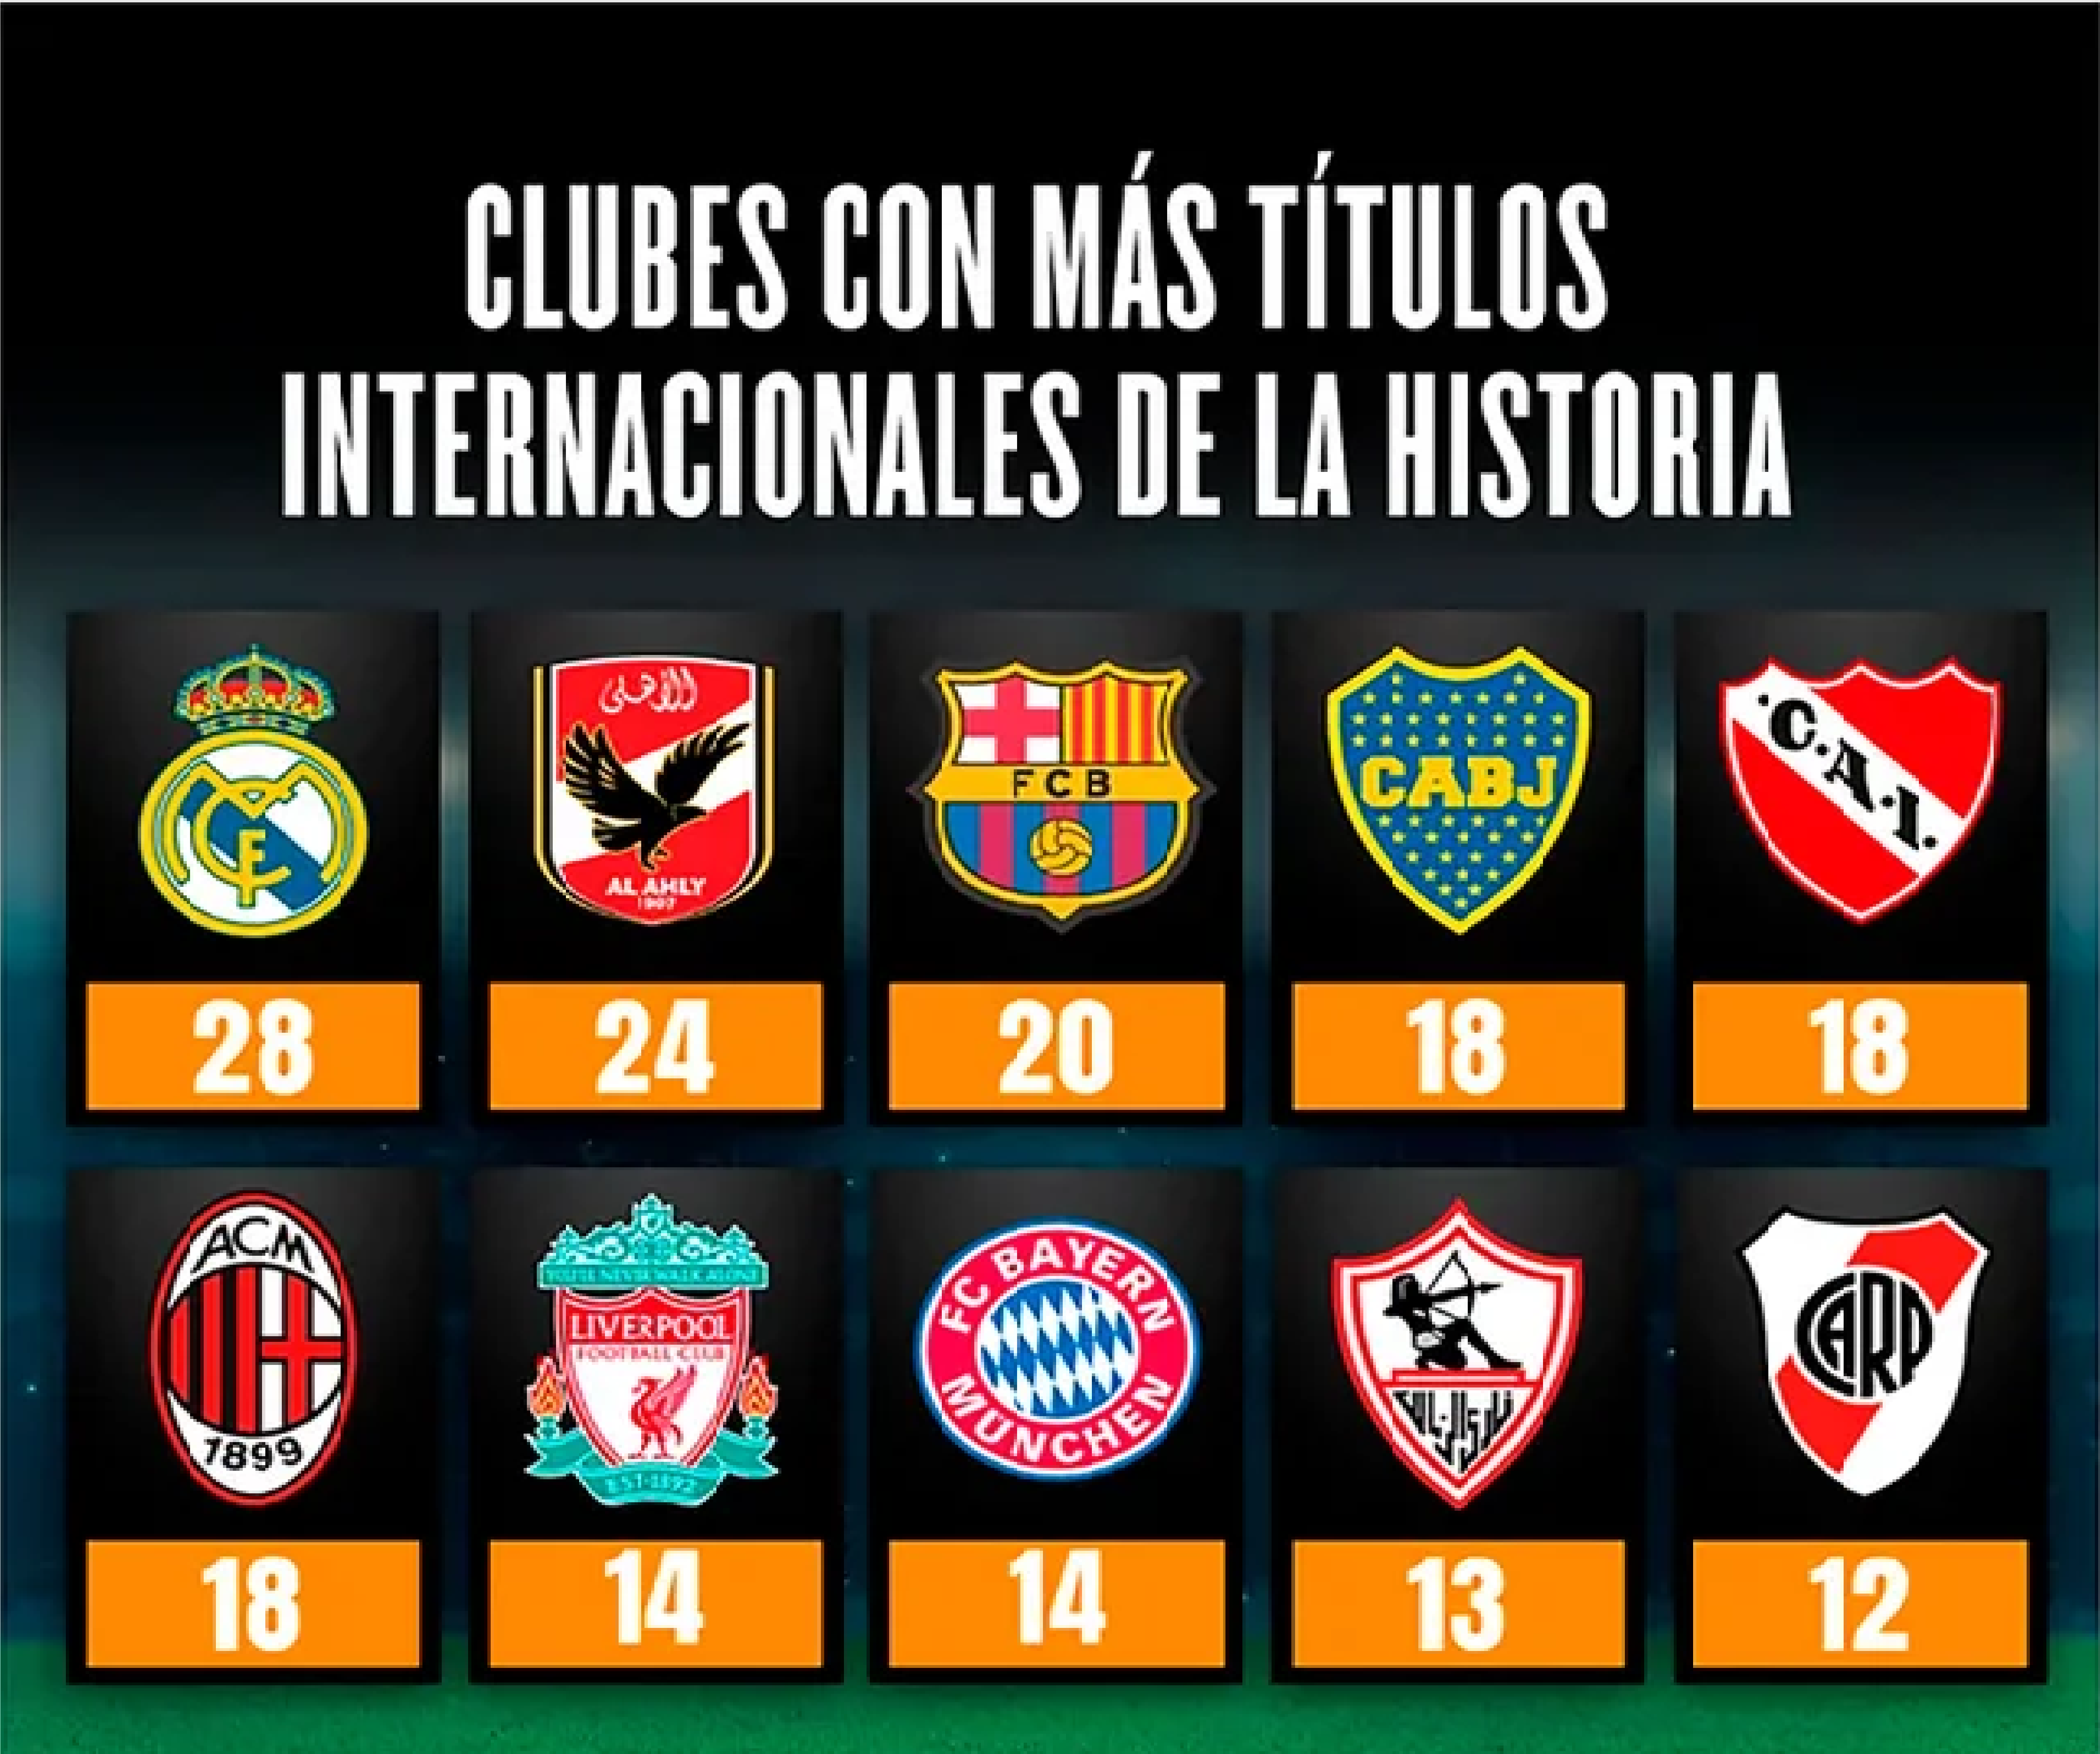 Real madrid champions últimos 10 años